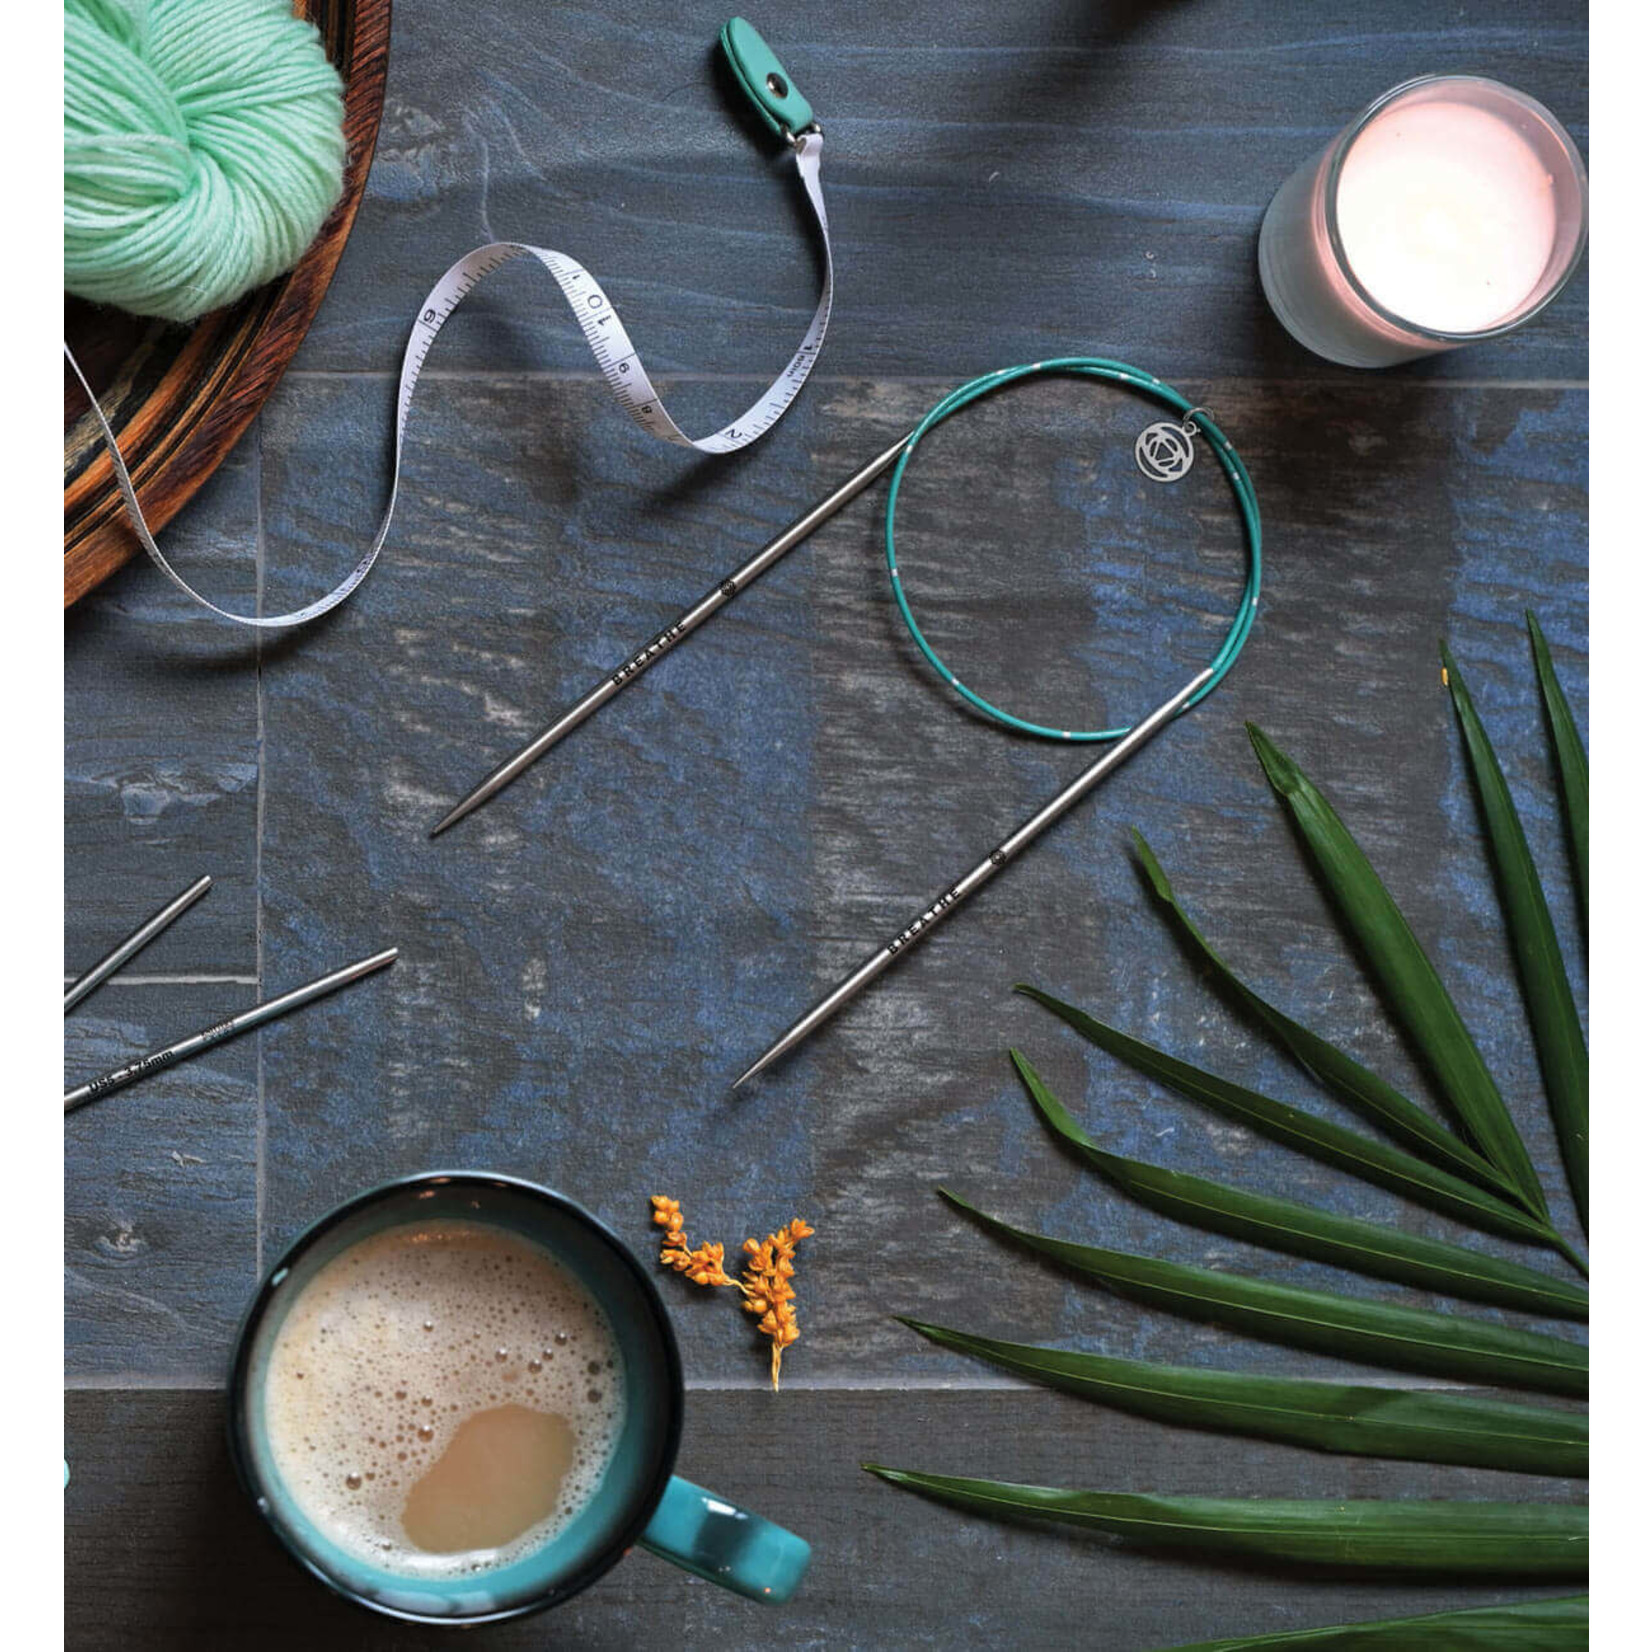 Knitter's Pride Mindful Fixed Circular Knitting Needles 40"